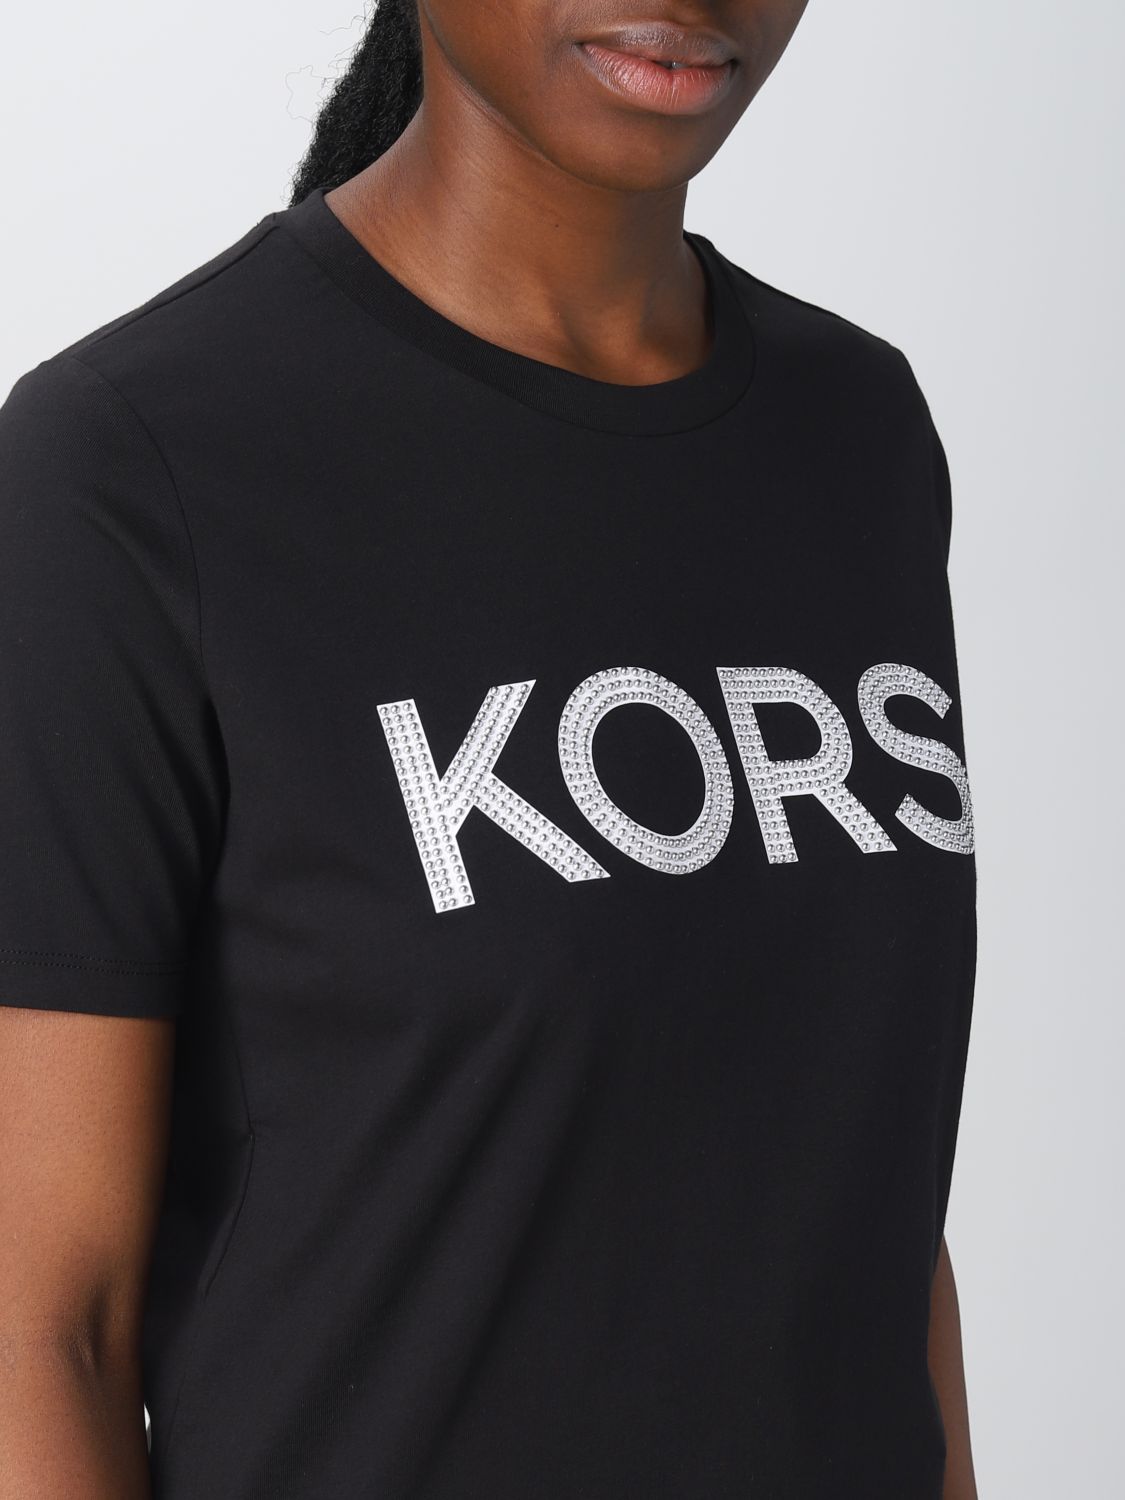 Michael Kors Outlet: t-shirt for woman - Black | Michael Kors t-shirt  MB95MP197J online on 